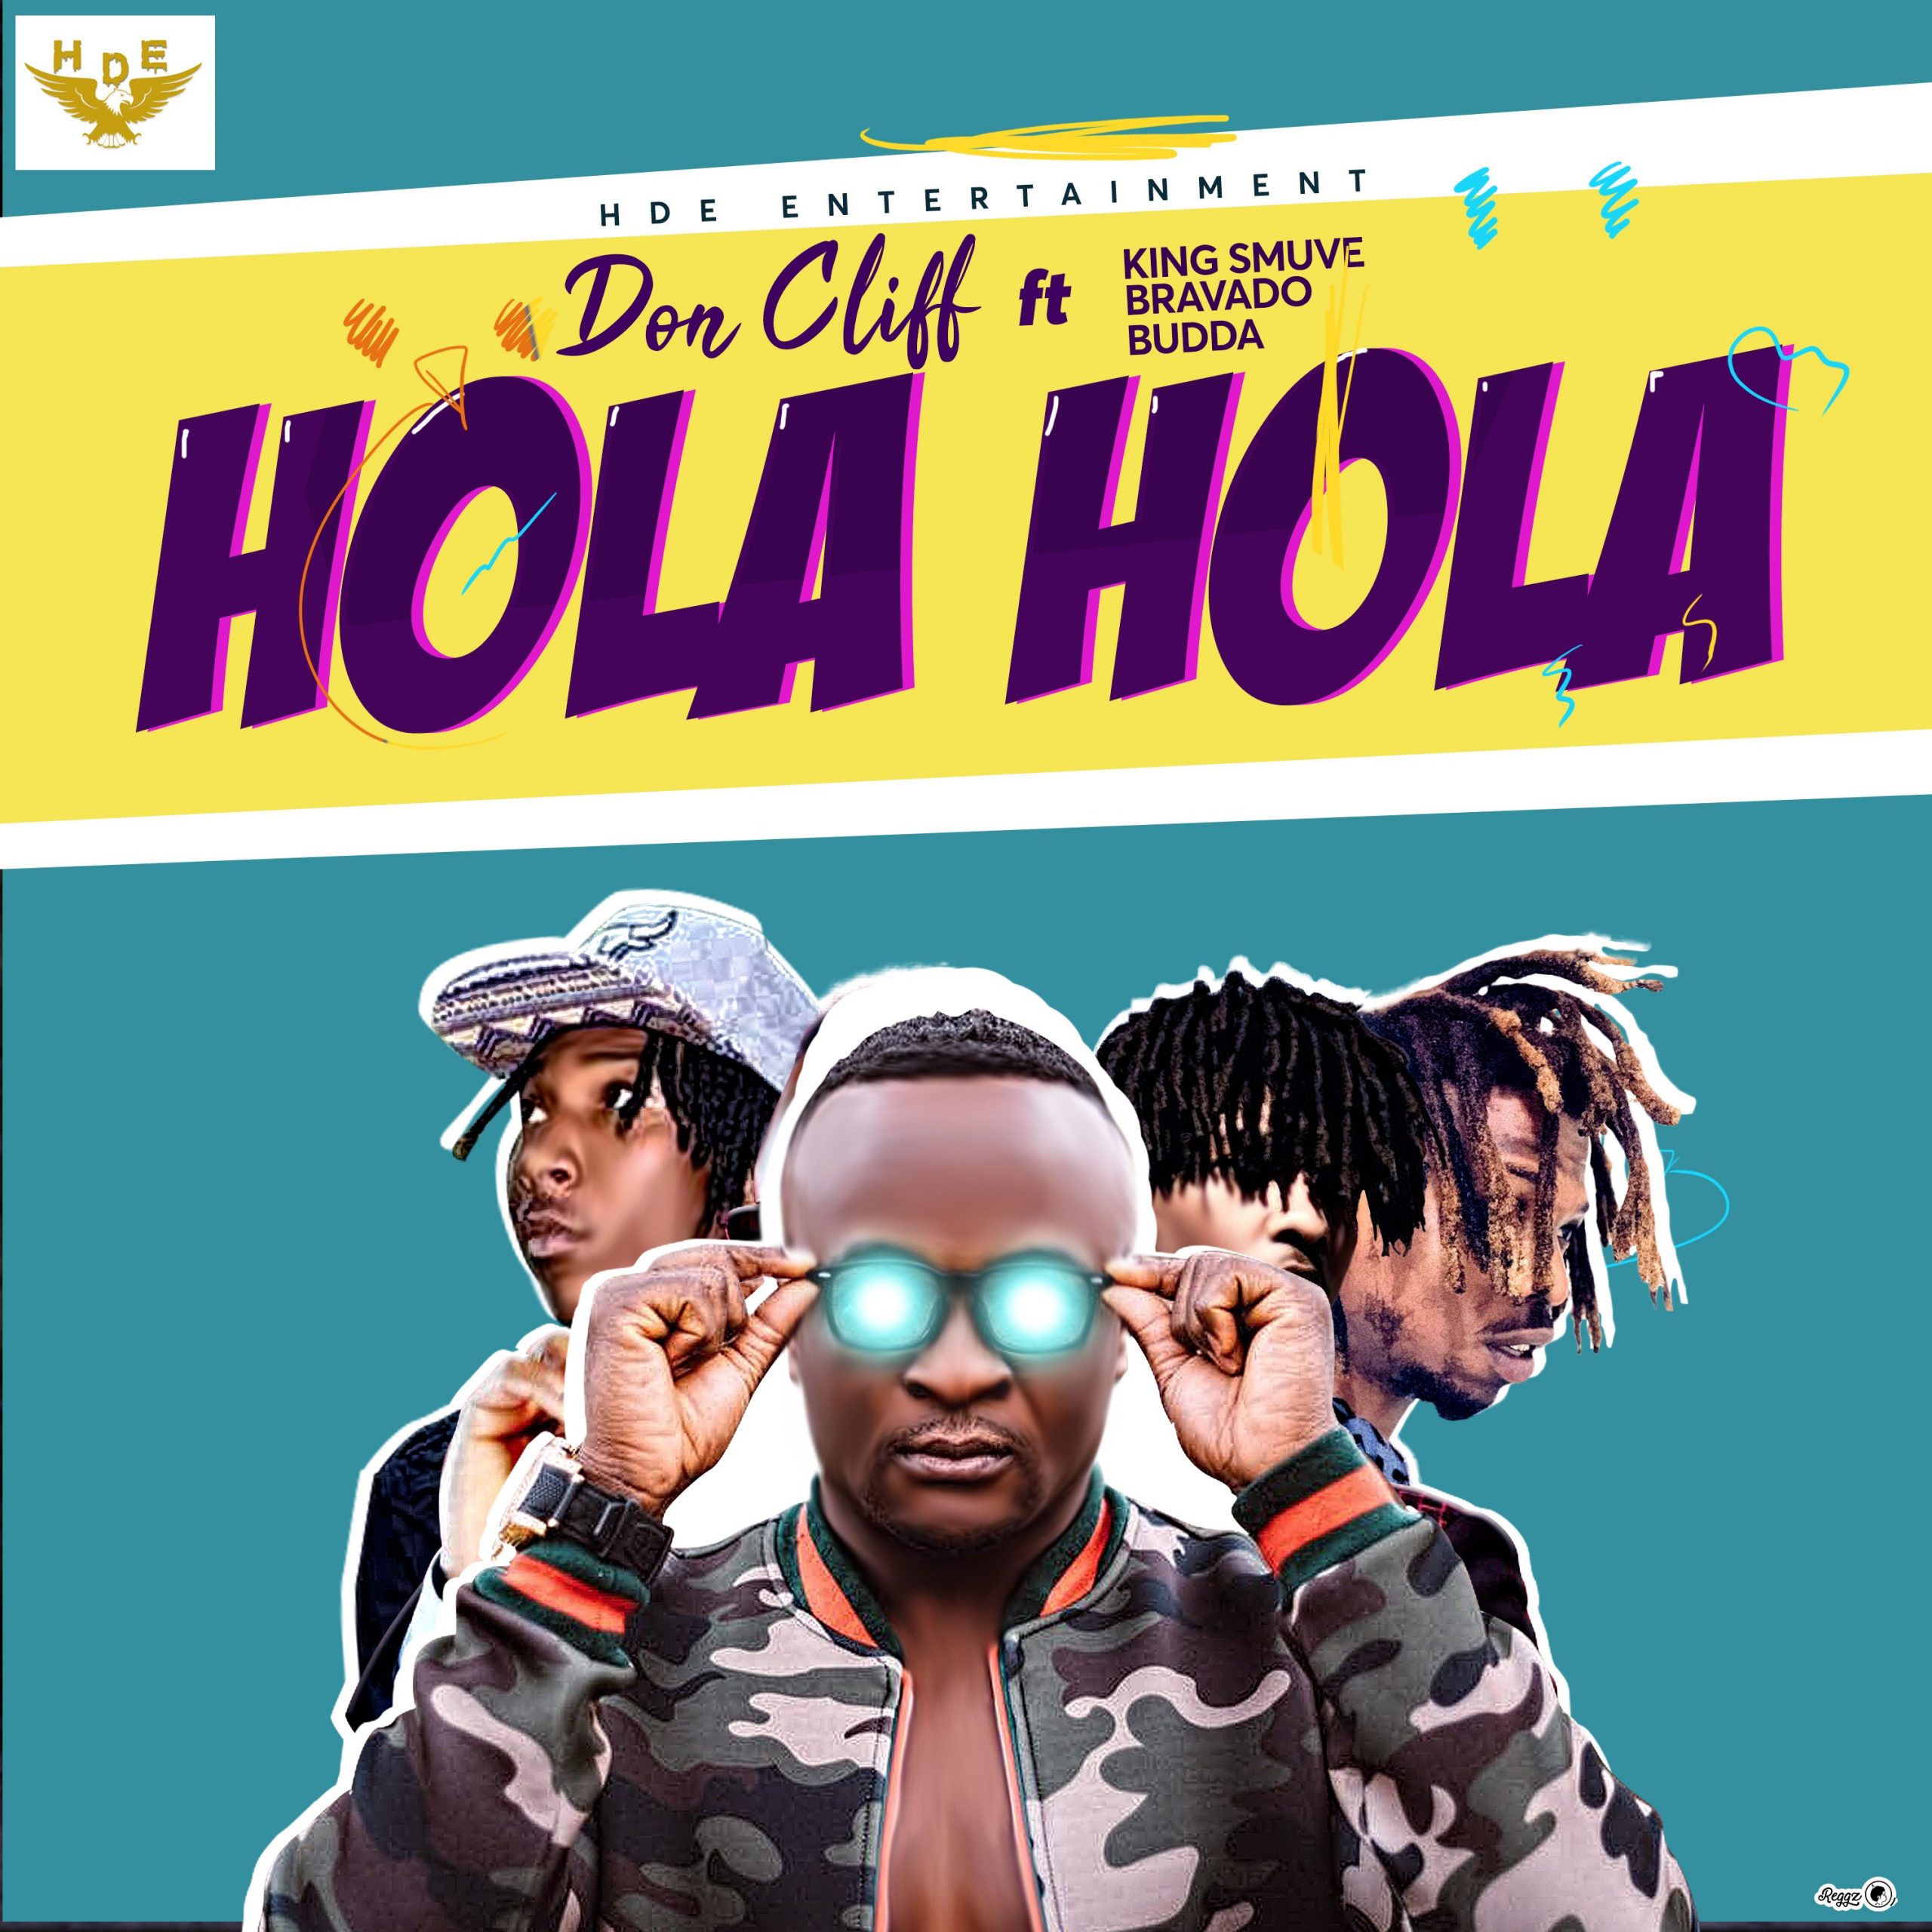 Don Clif drops "Hola Hola" music video